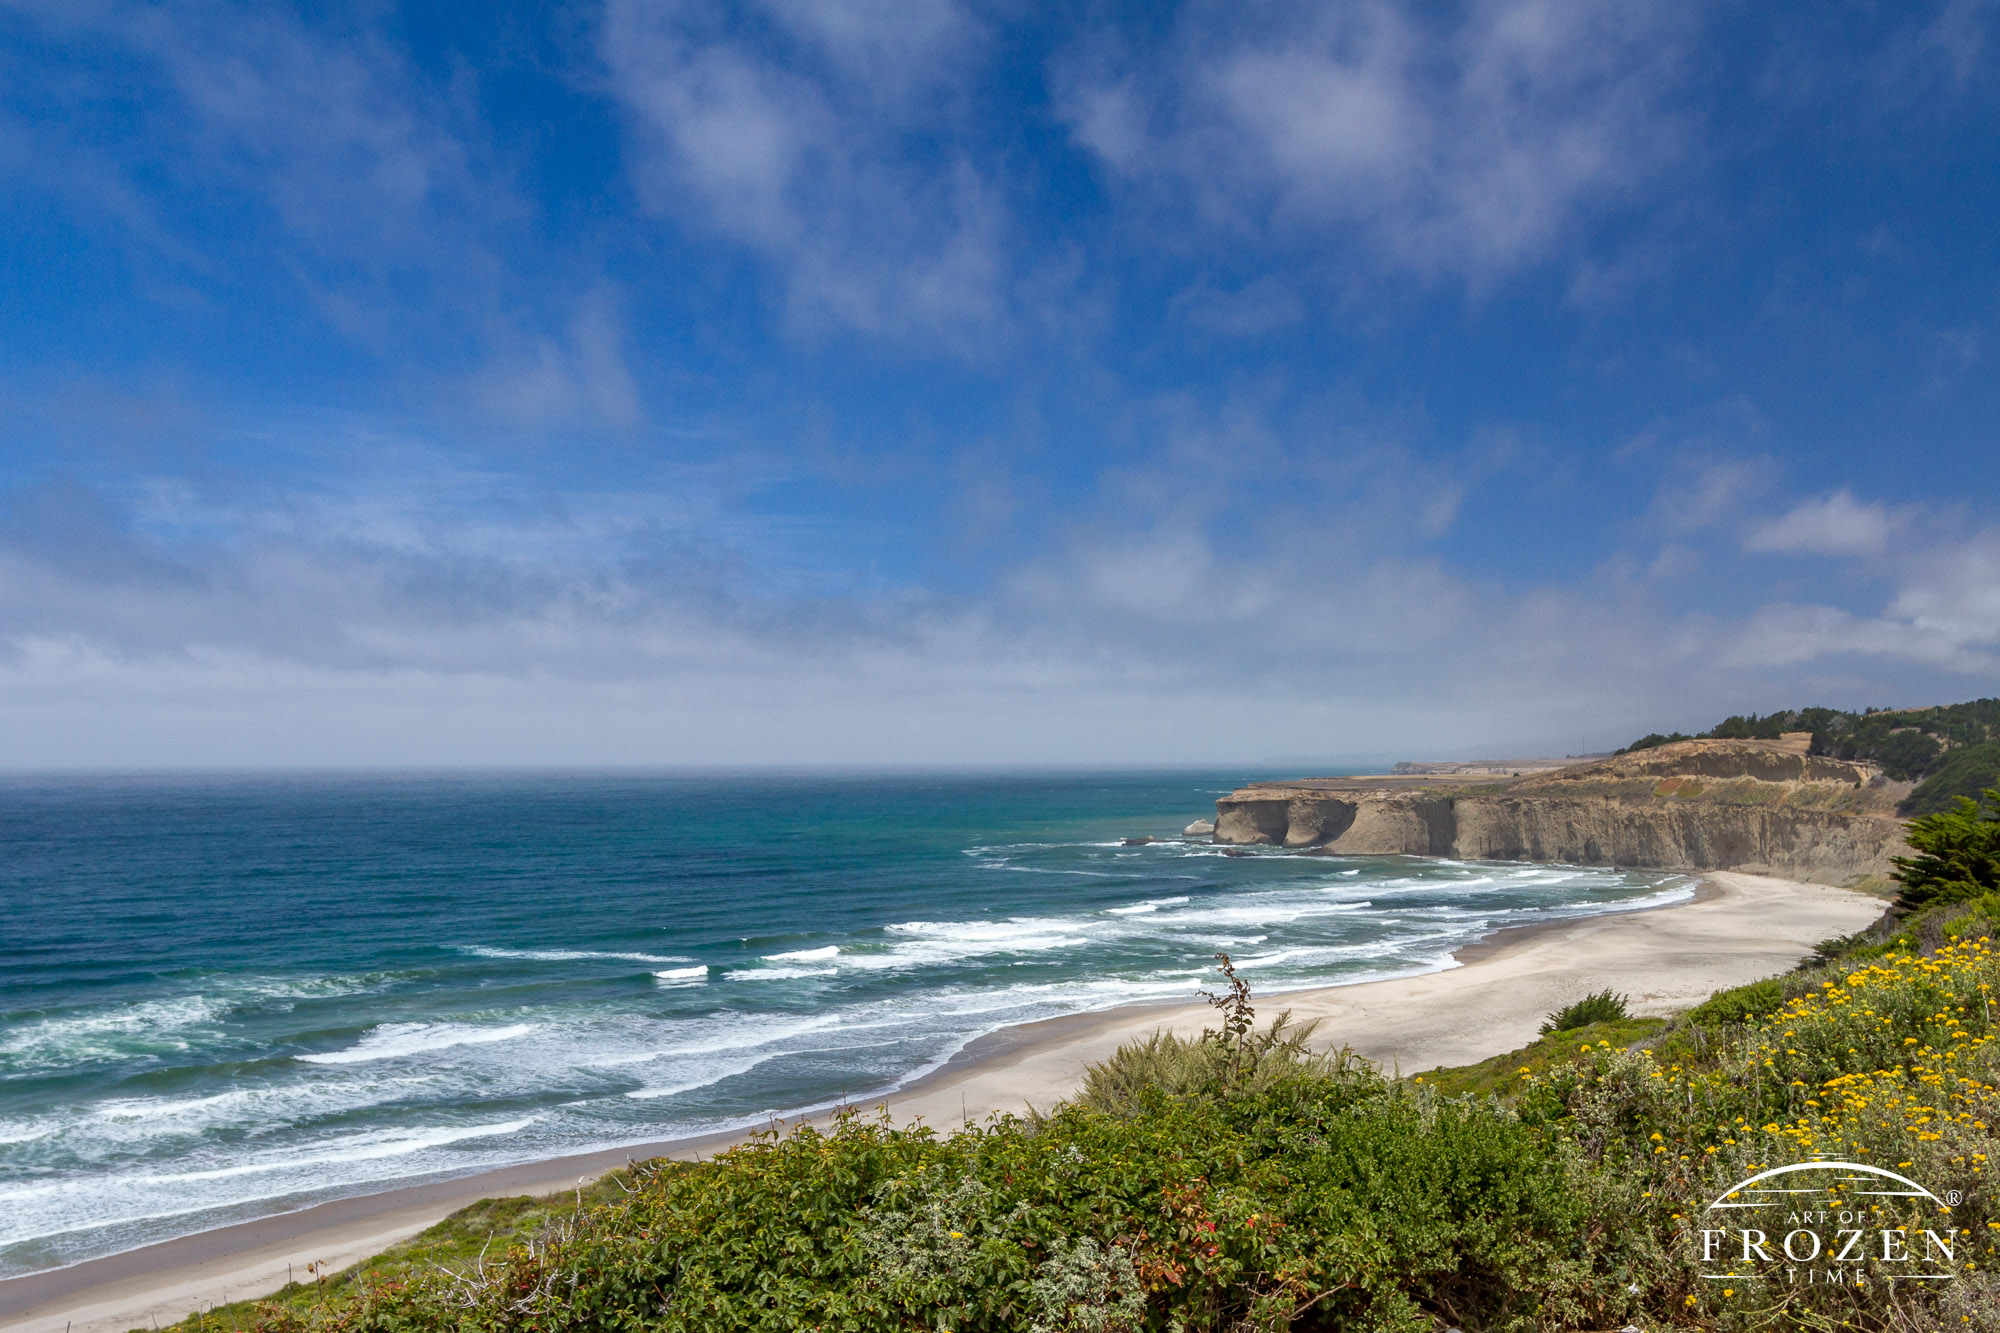 A Highway 1 vista along the California coast revealing a long sandy beach with a fog bank making its way ashore.